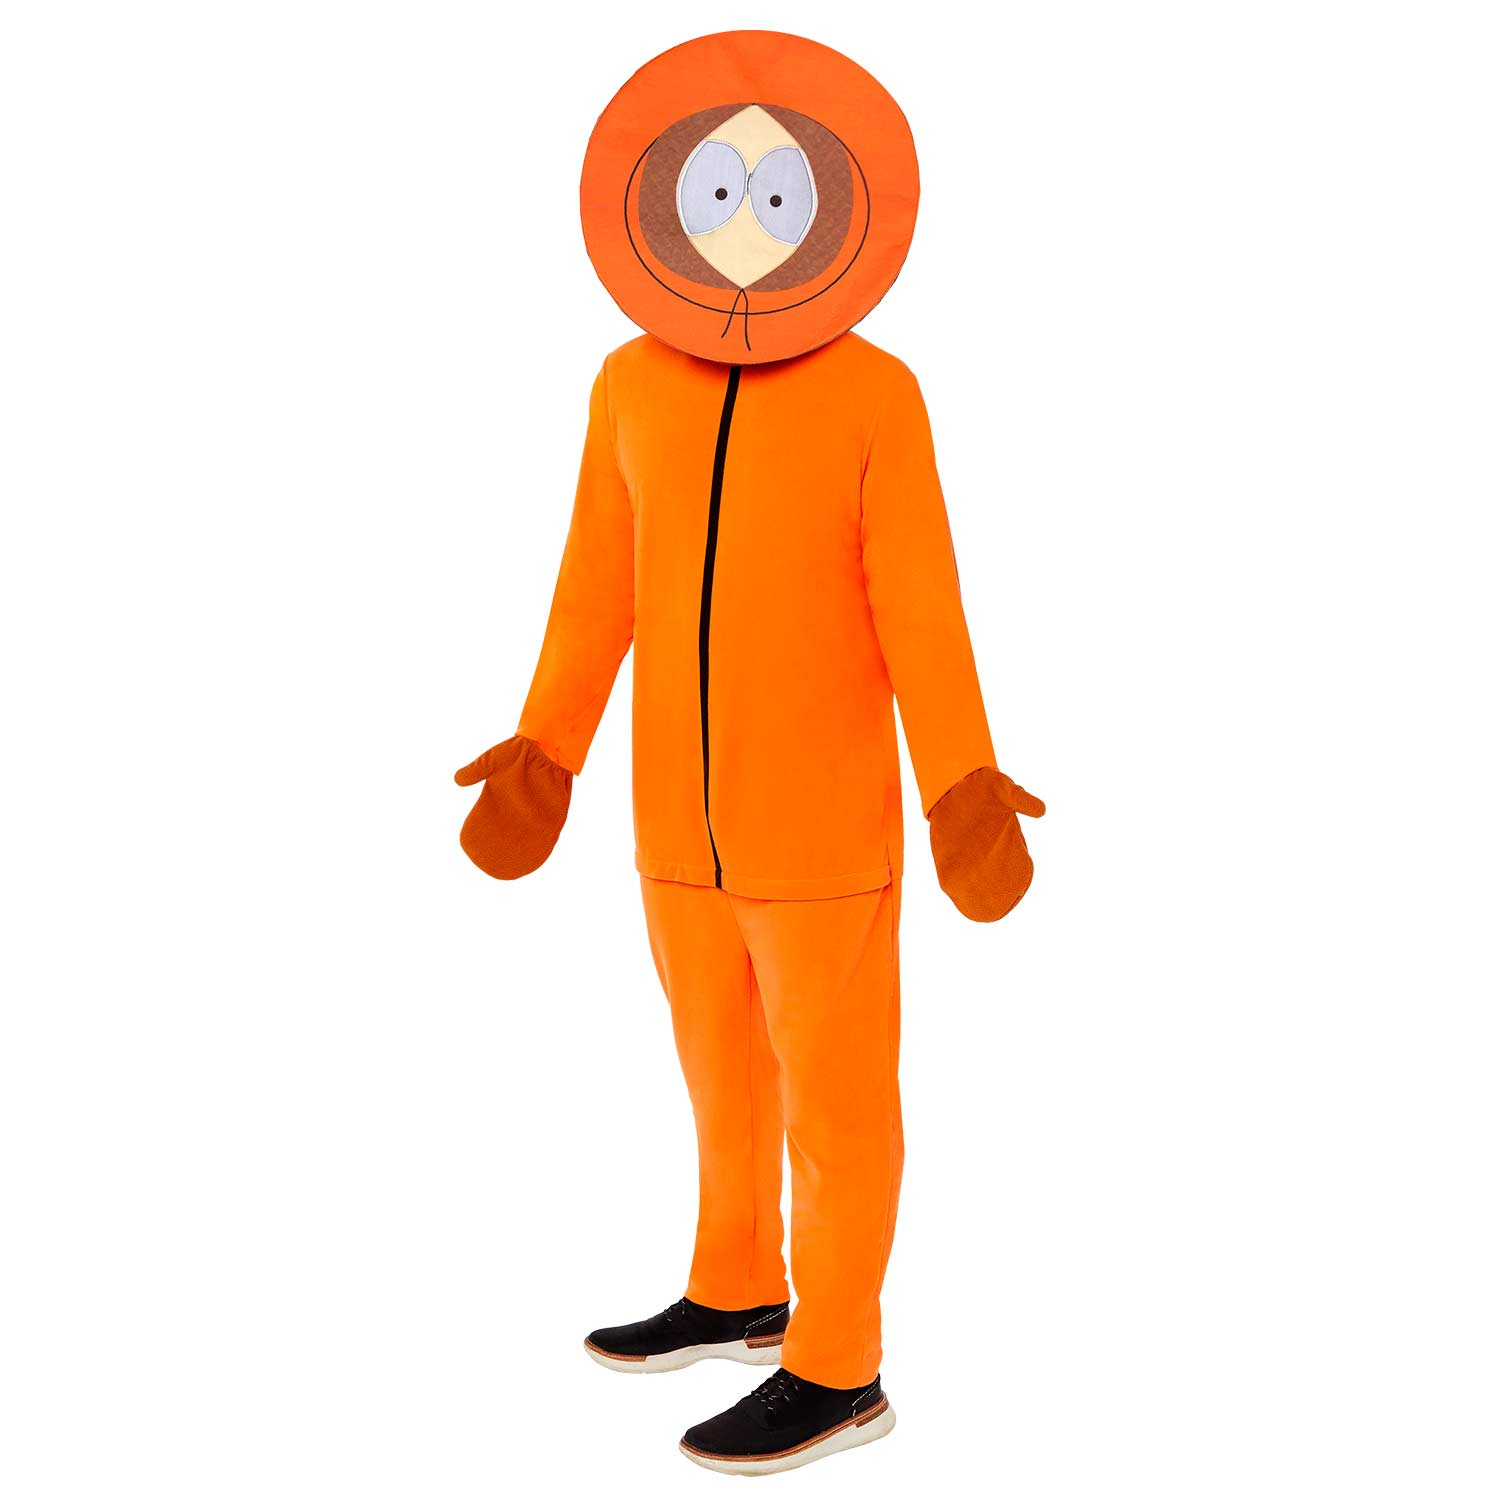 Southpark Kenny Costume - Size Large - 1 PC : Amscan International